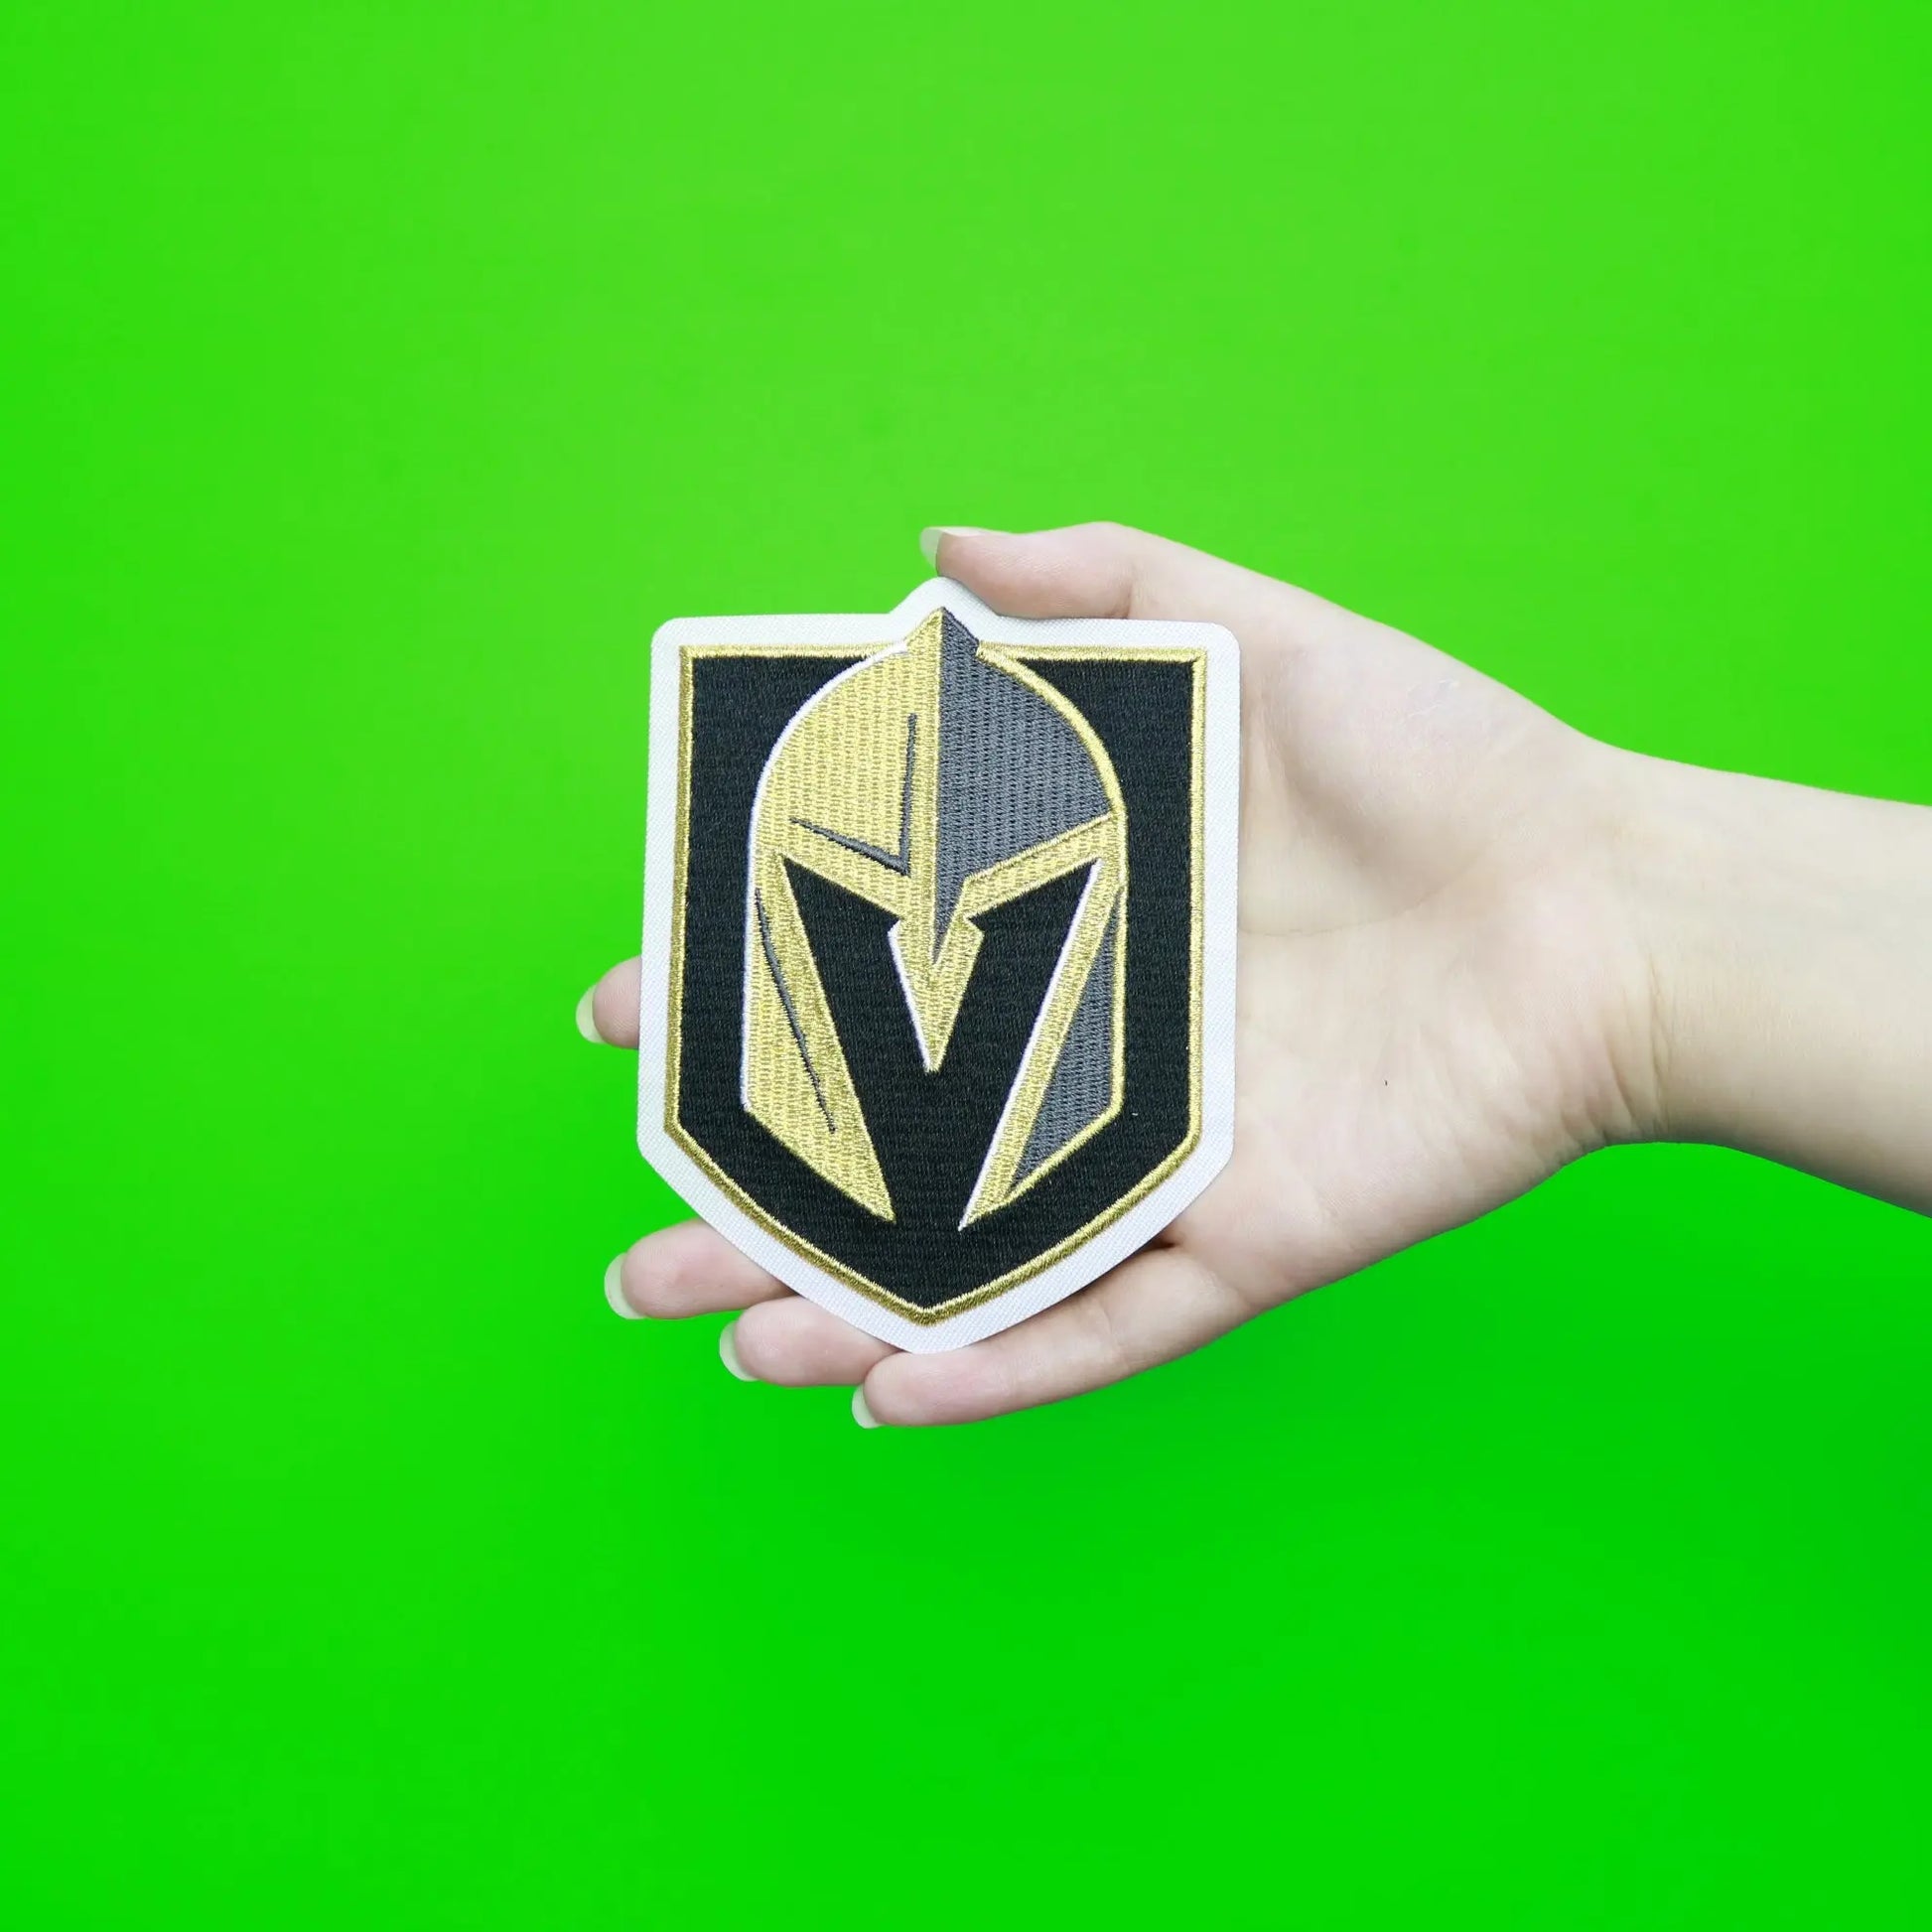 Las Vegas Golden Knights Primary Team Logo Patch 